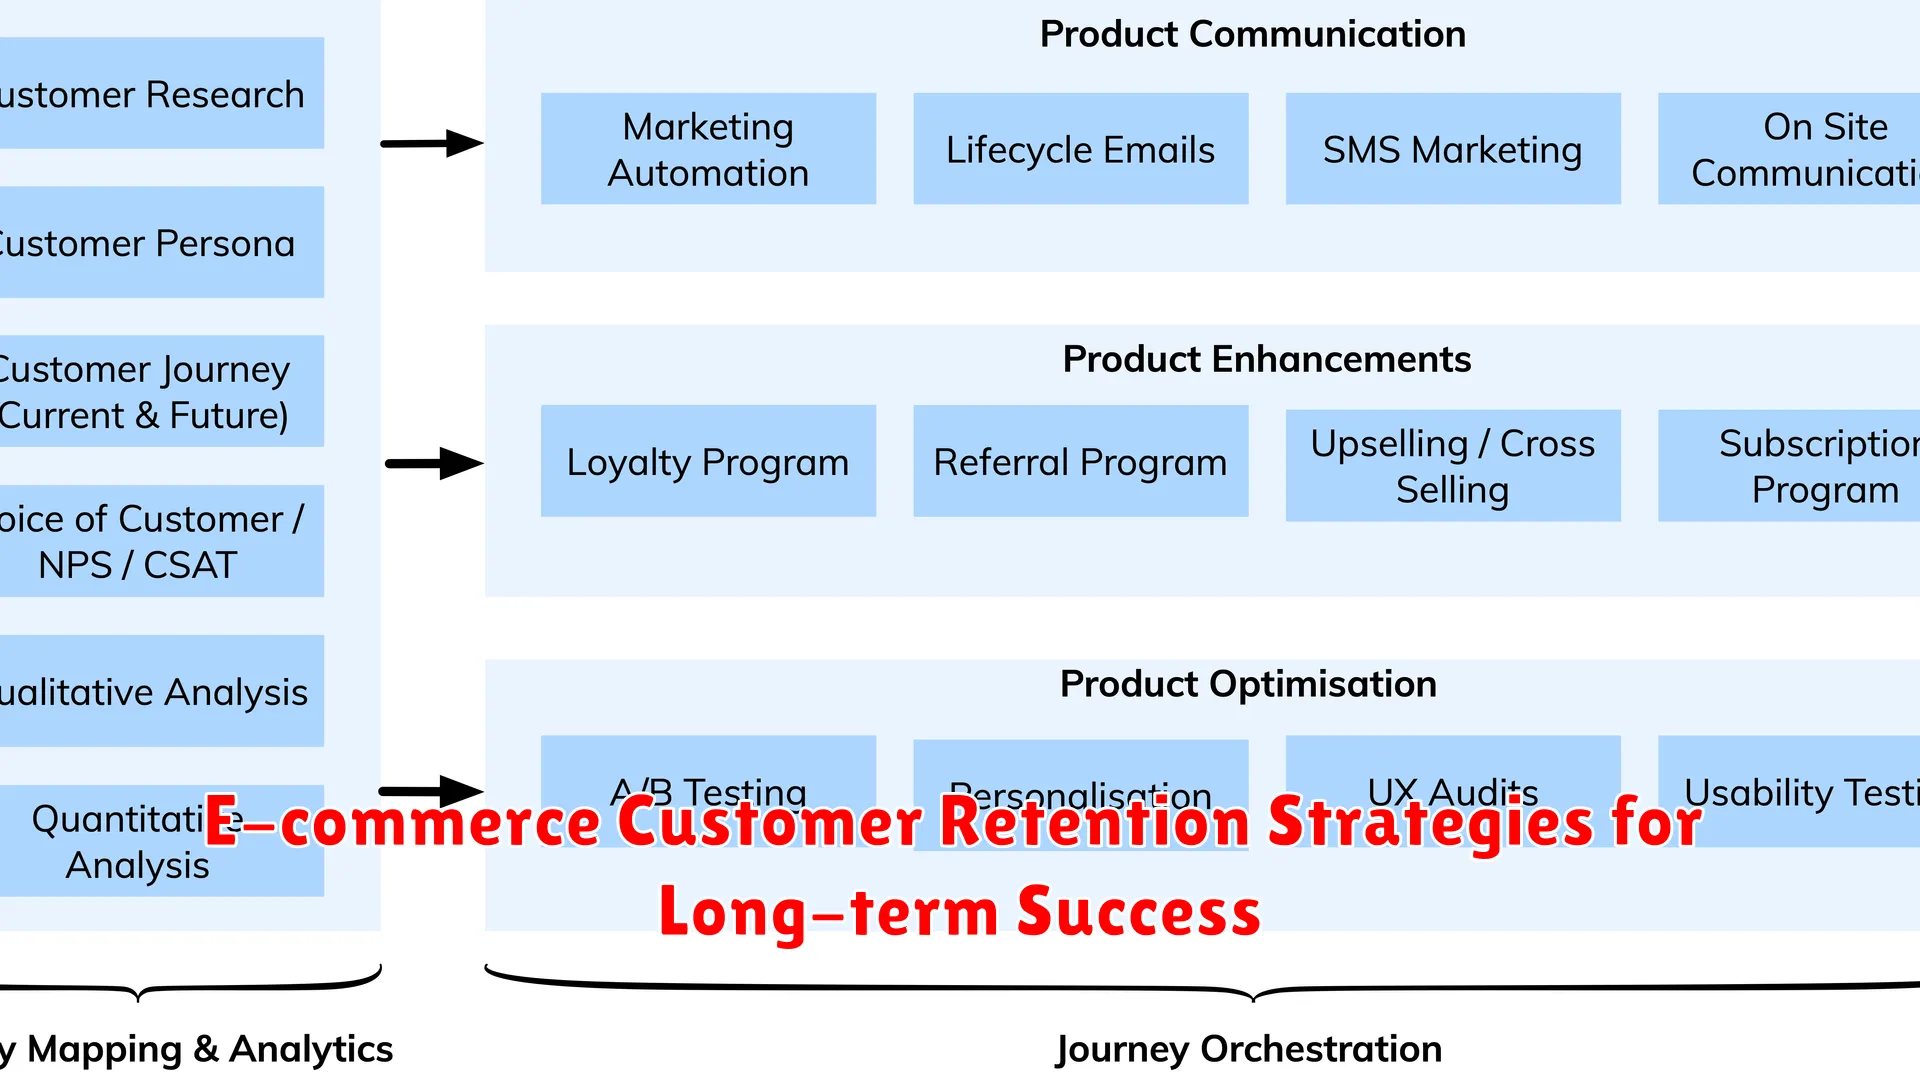 E-commerce Customer Retention Strategies for Long-term Success